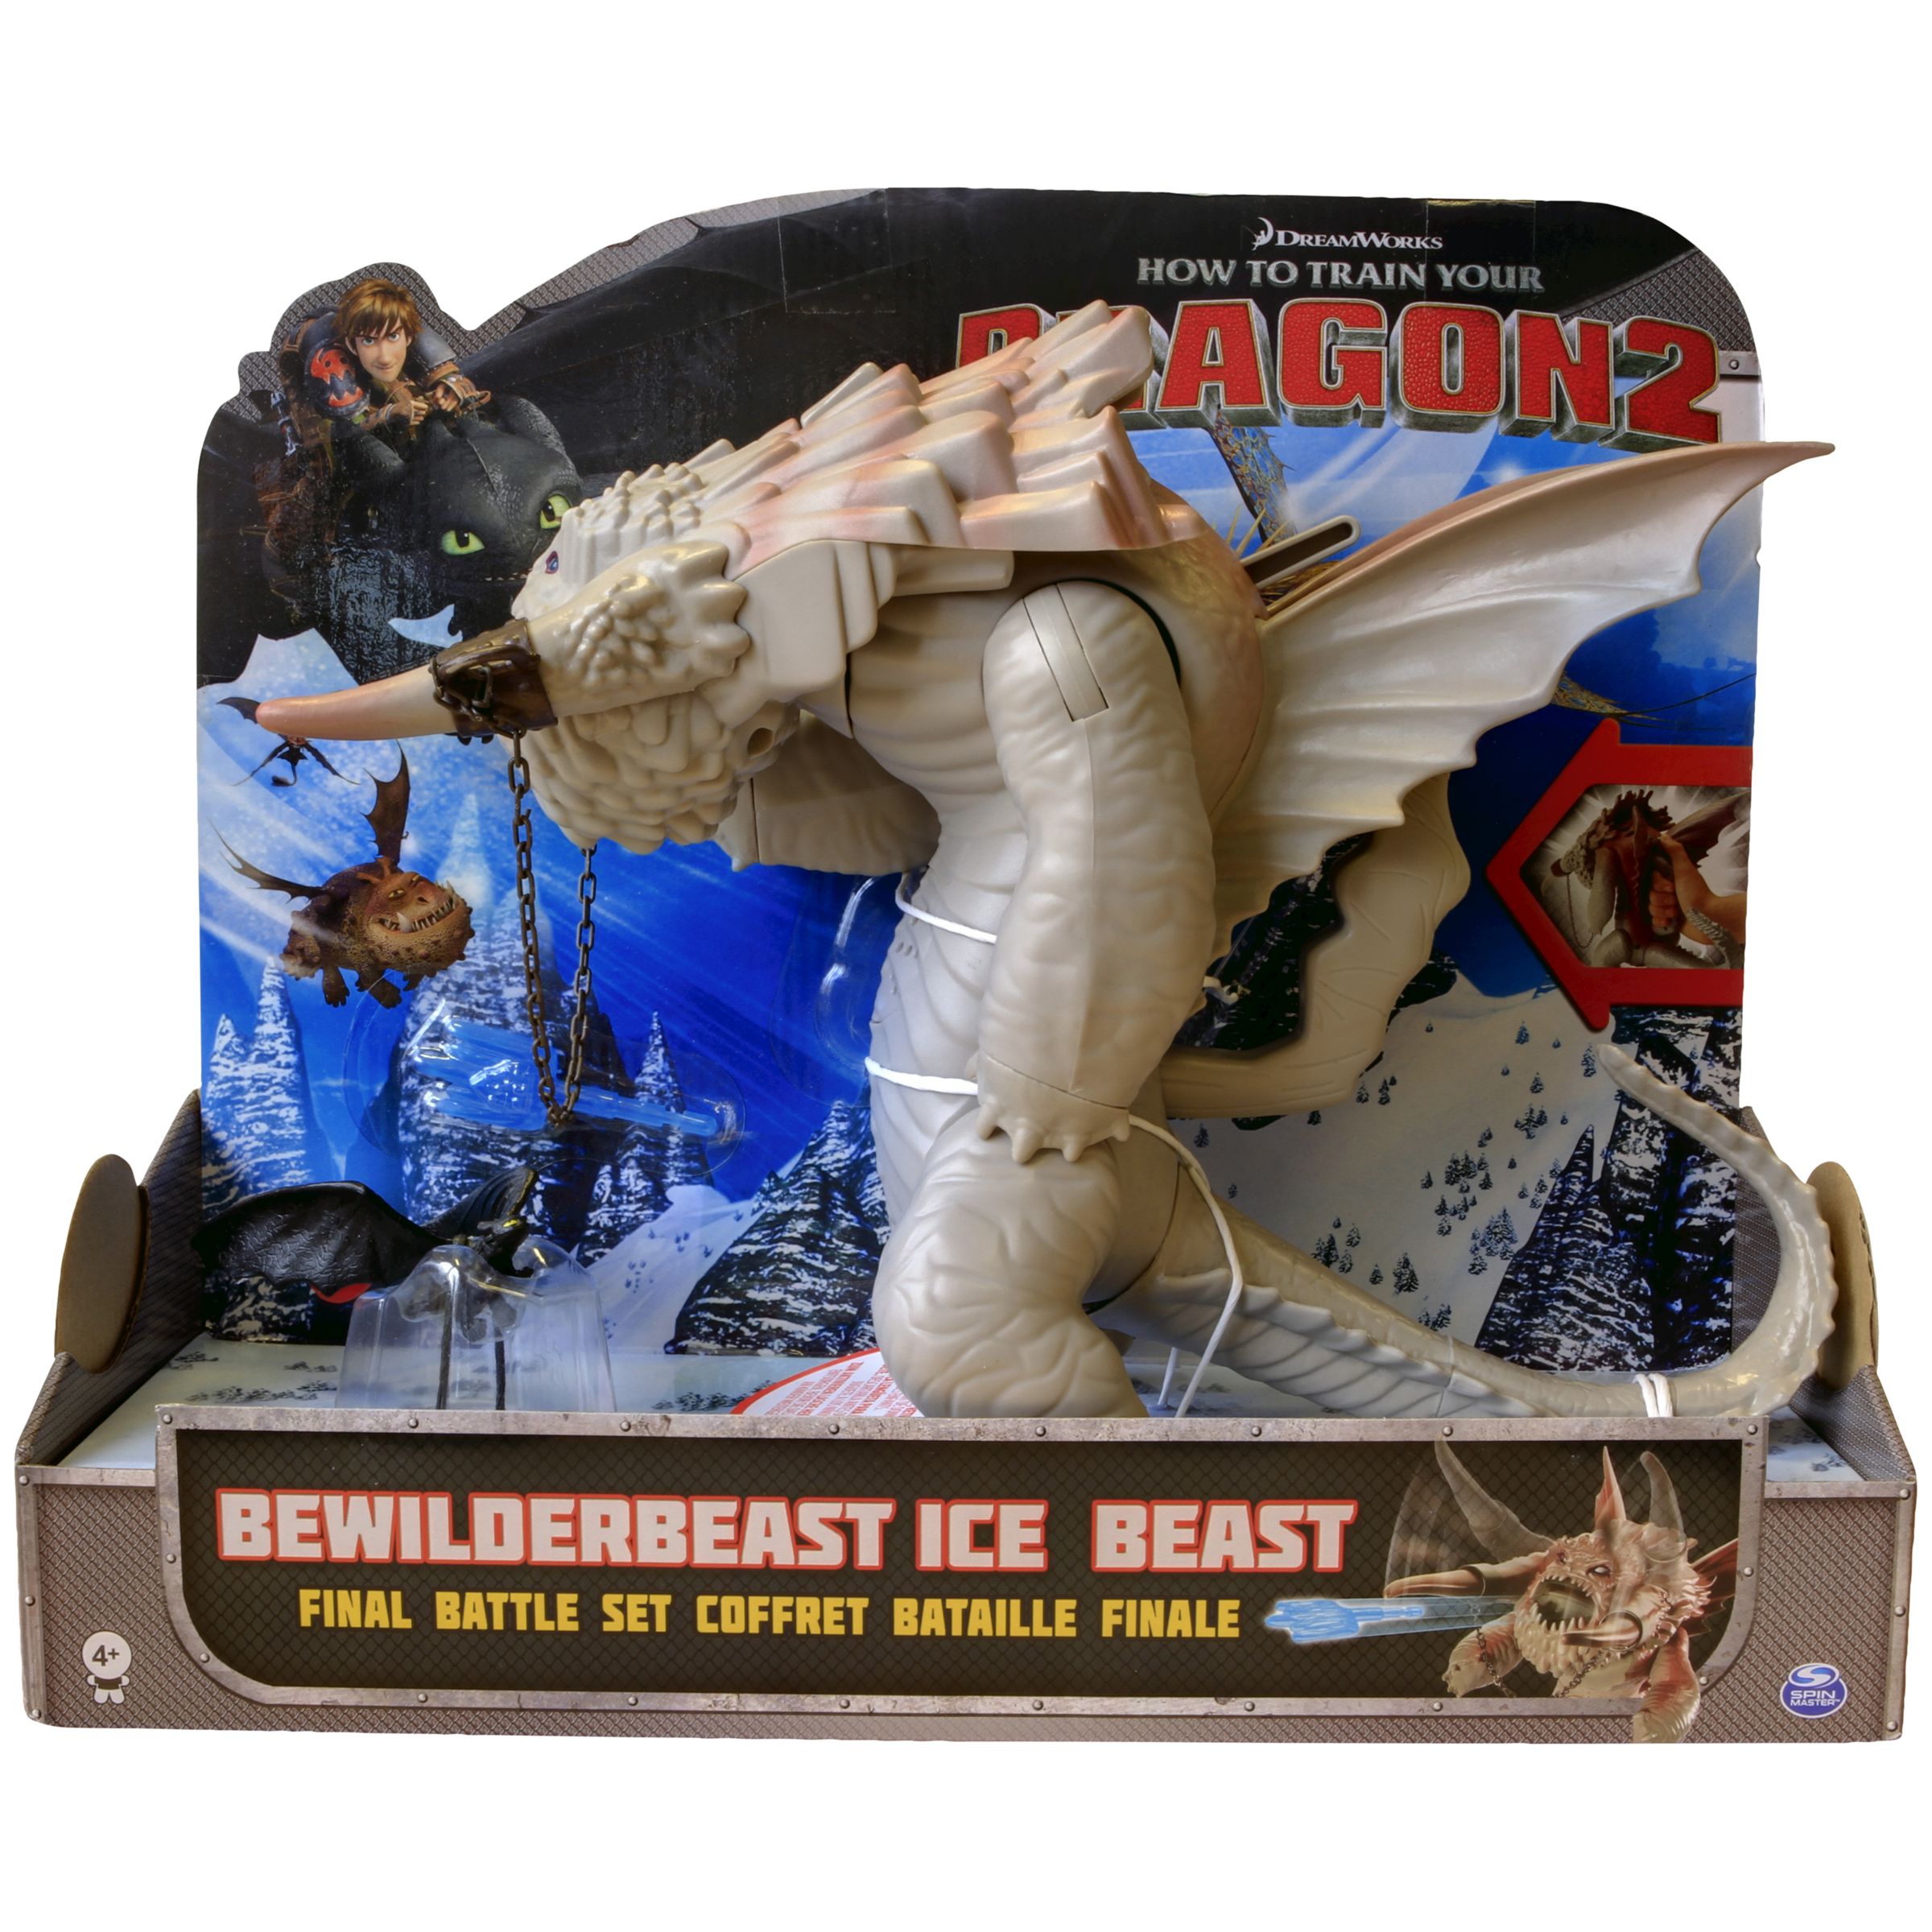 How To Train Your Dragon 2 Bewilderbeast Ice Beast Final